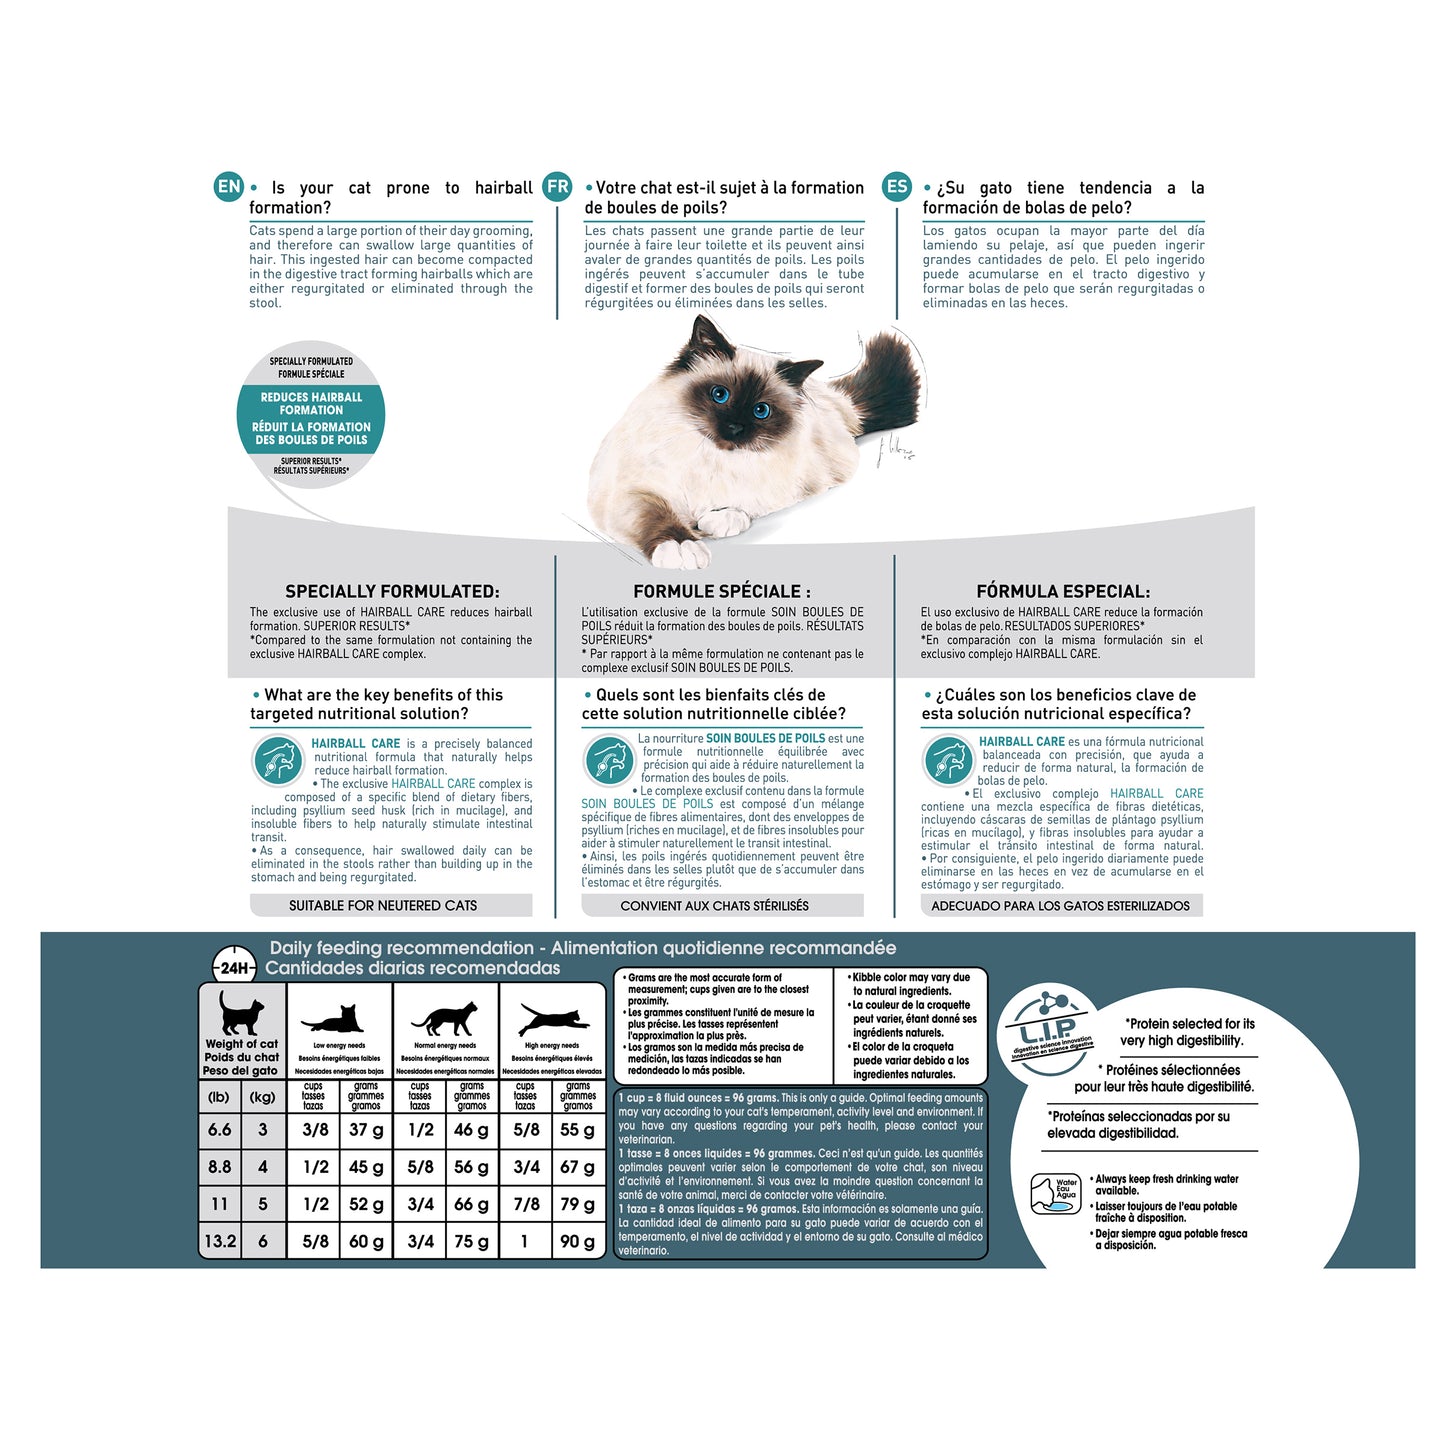 Royal Canin Hairball Care Dry Cat Food, 6-lb Bag